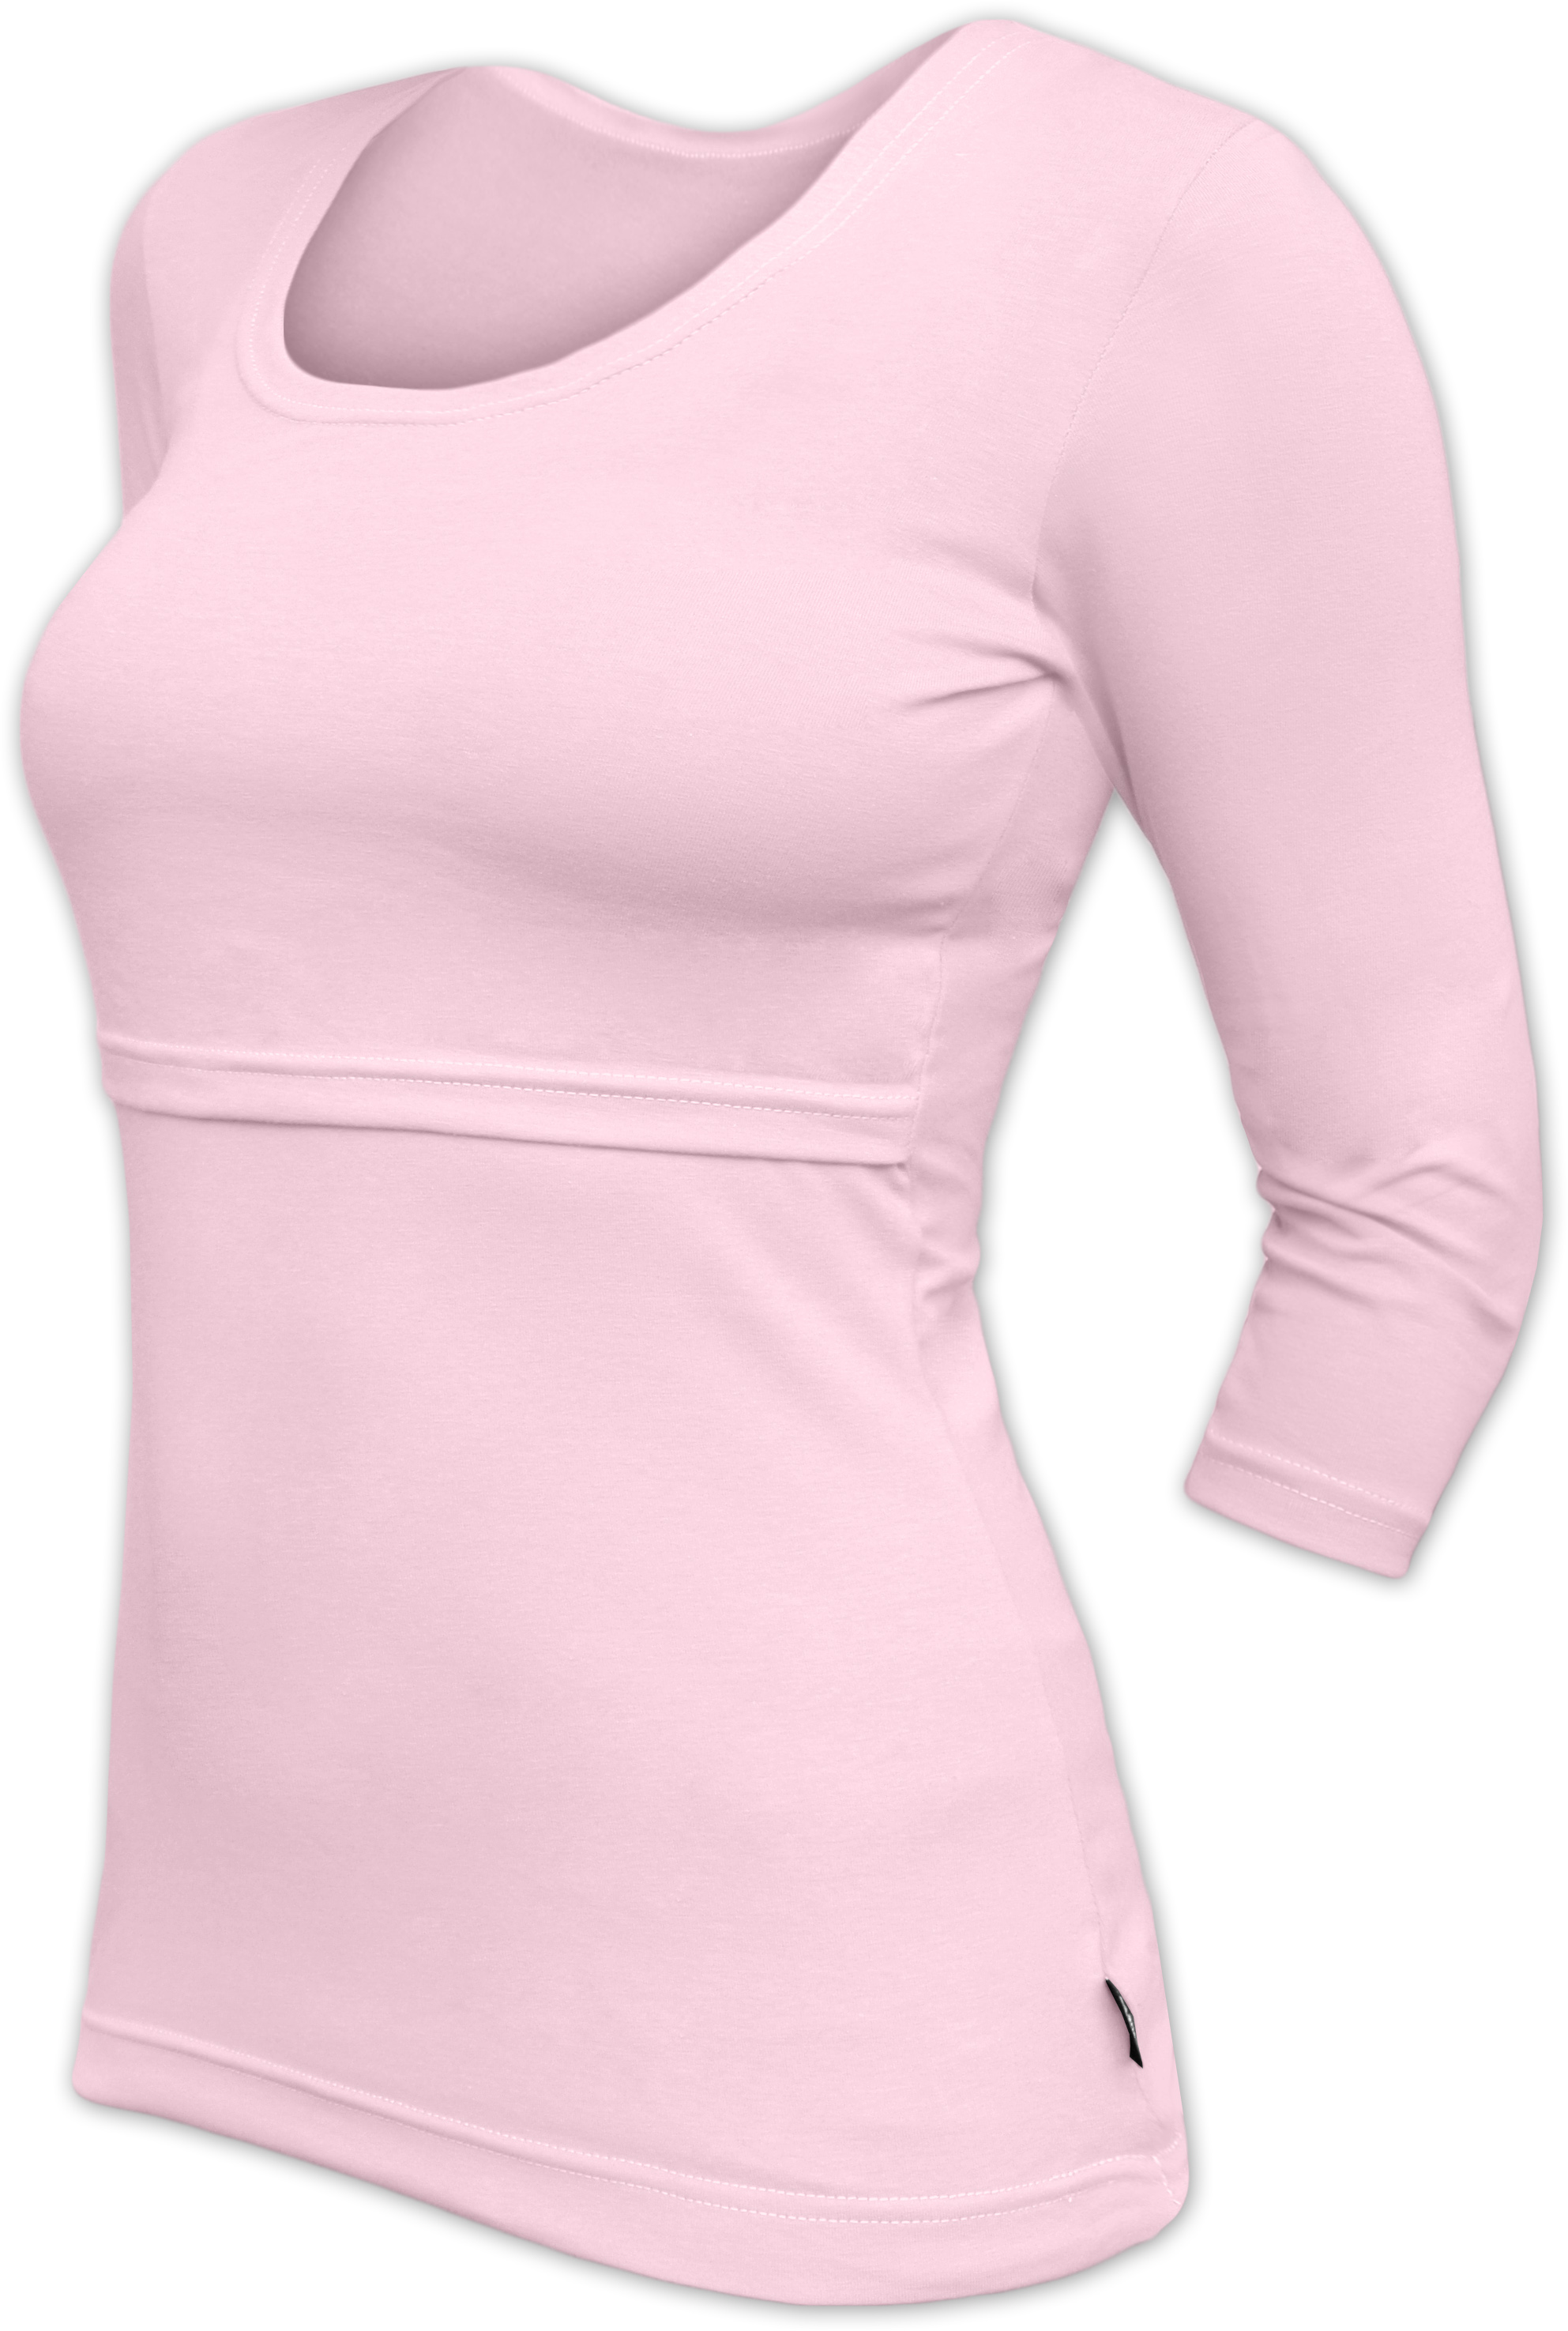 KATERINA- breast-feeding T-shirt 01, 3/4 sleeves, LIGHT PINK S/M